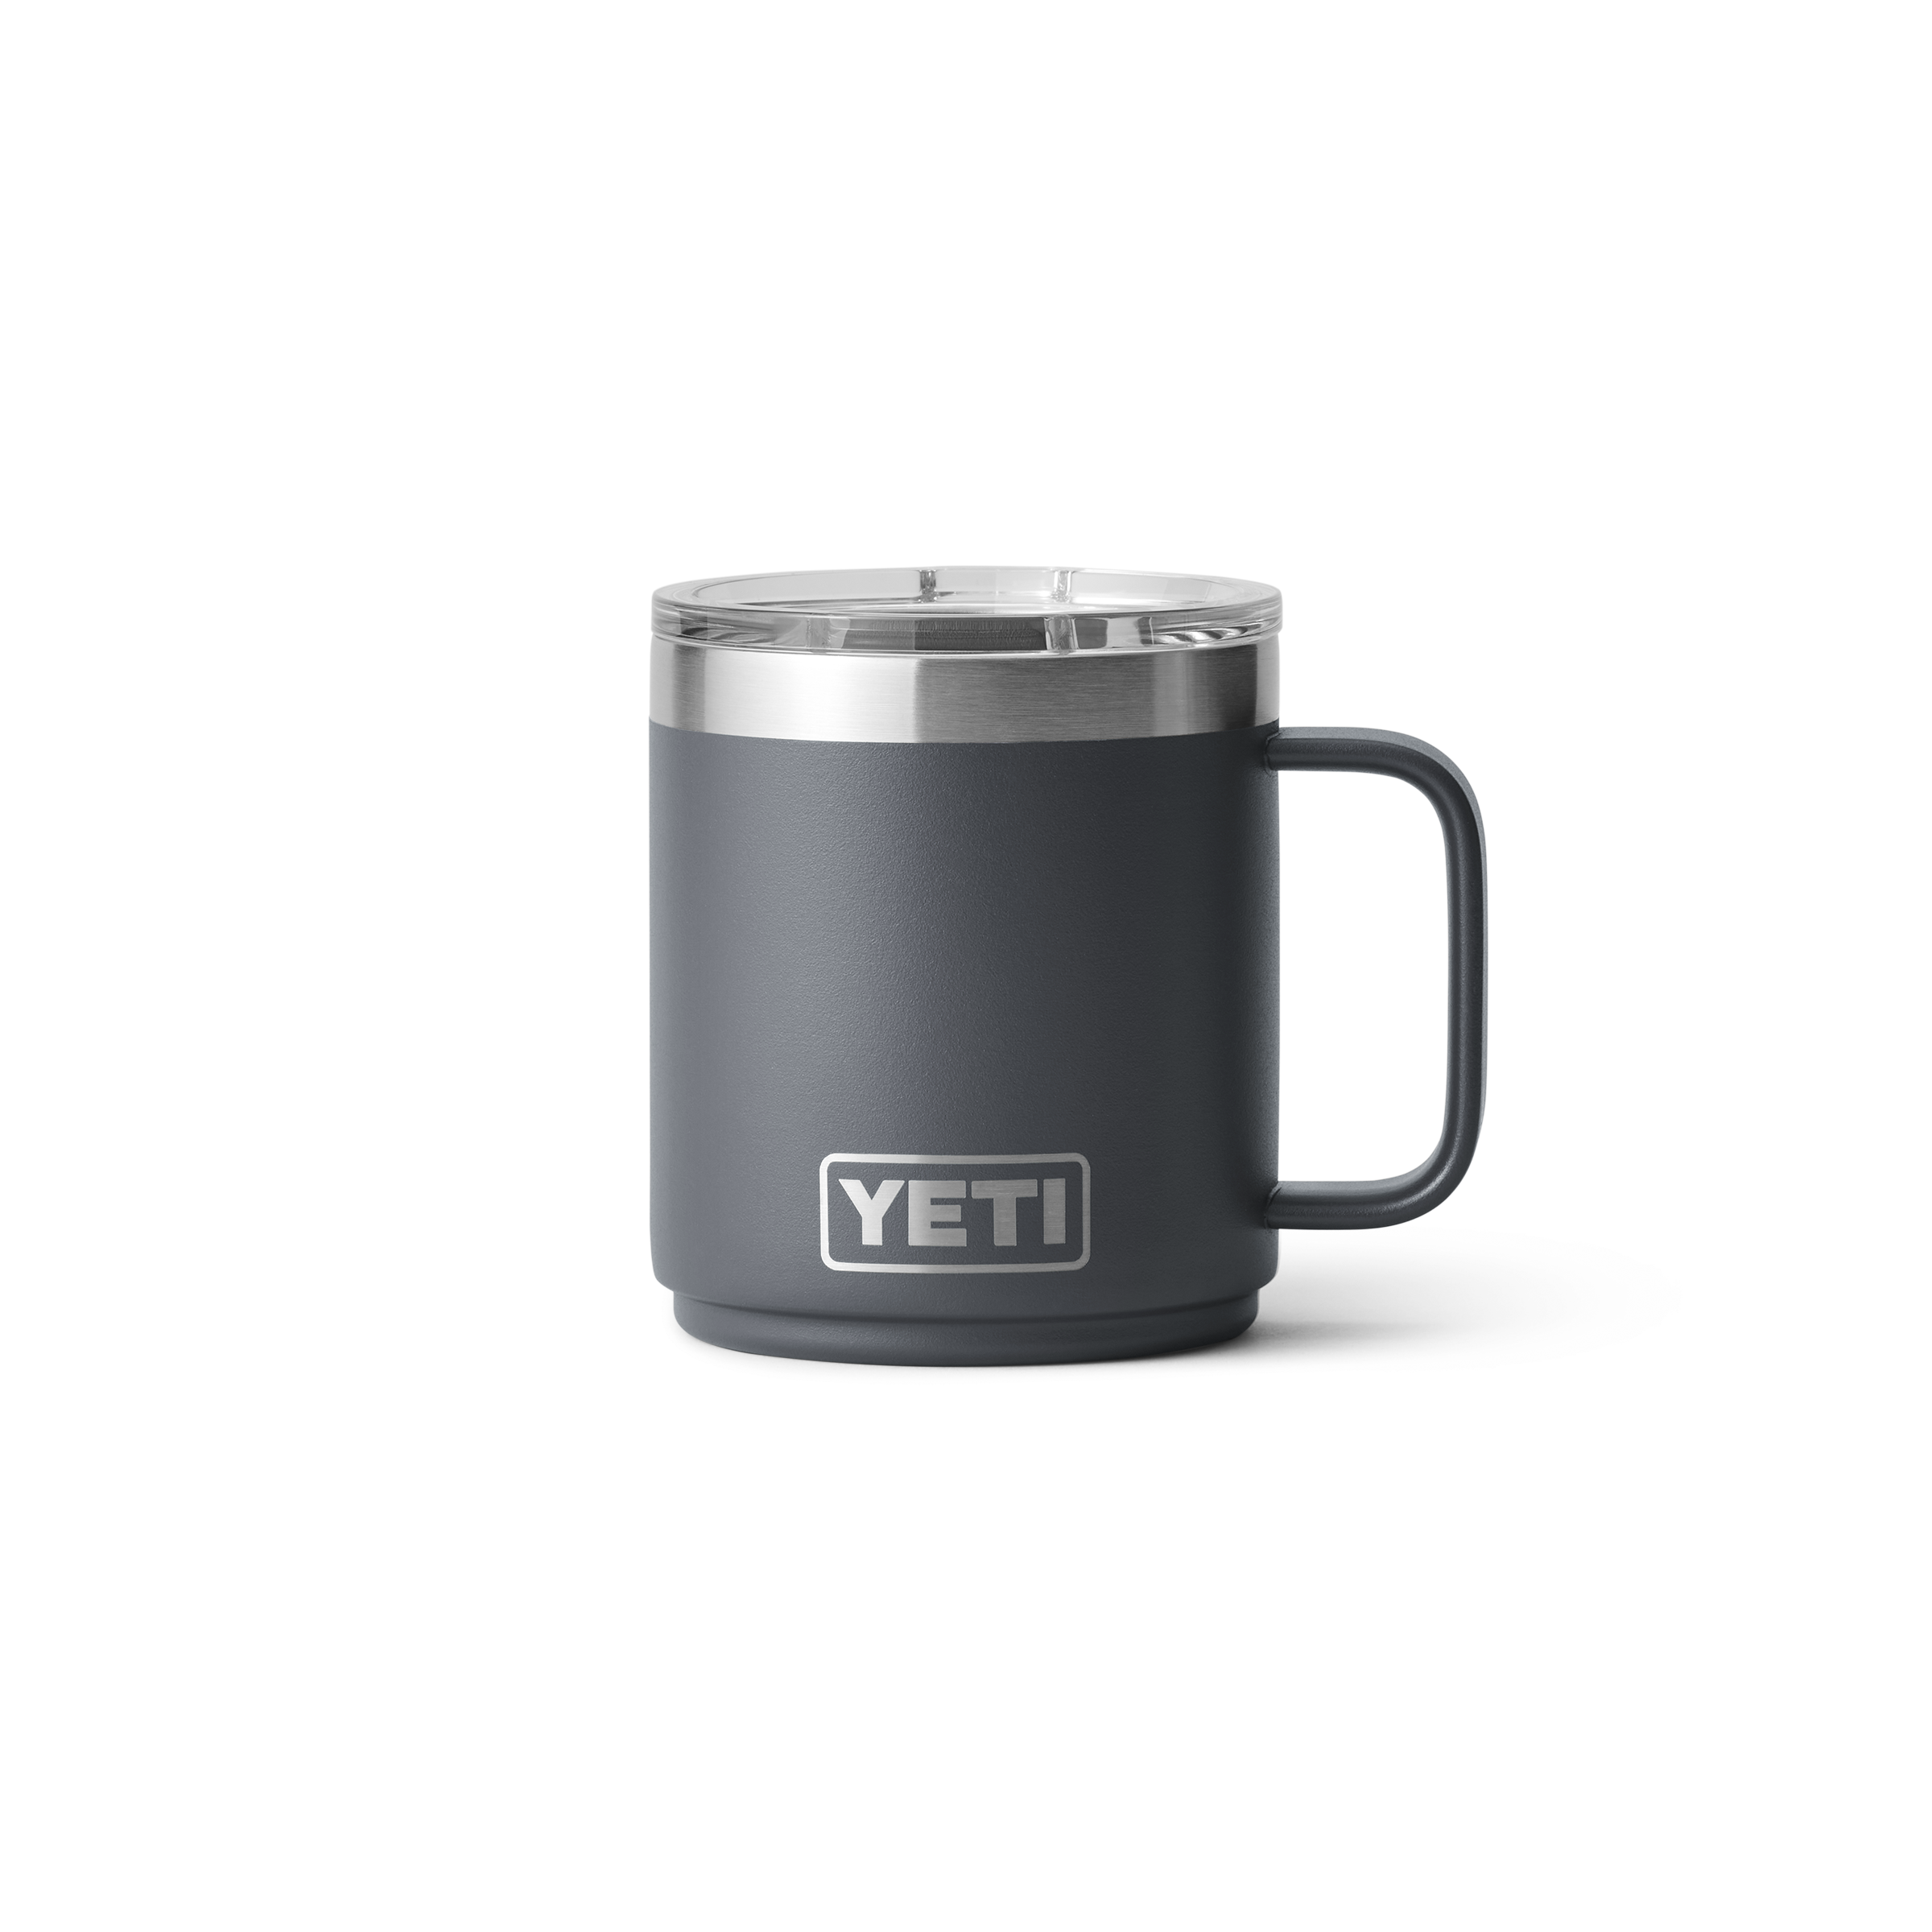 YETI charcoal coffee mug, with YETI logo on the front